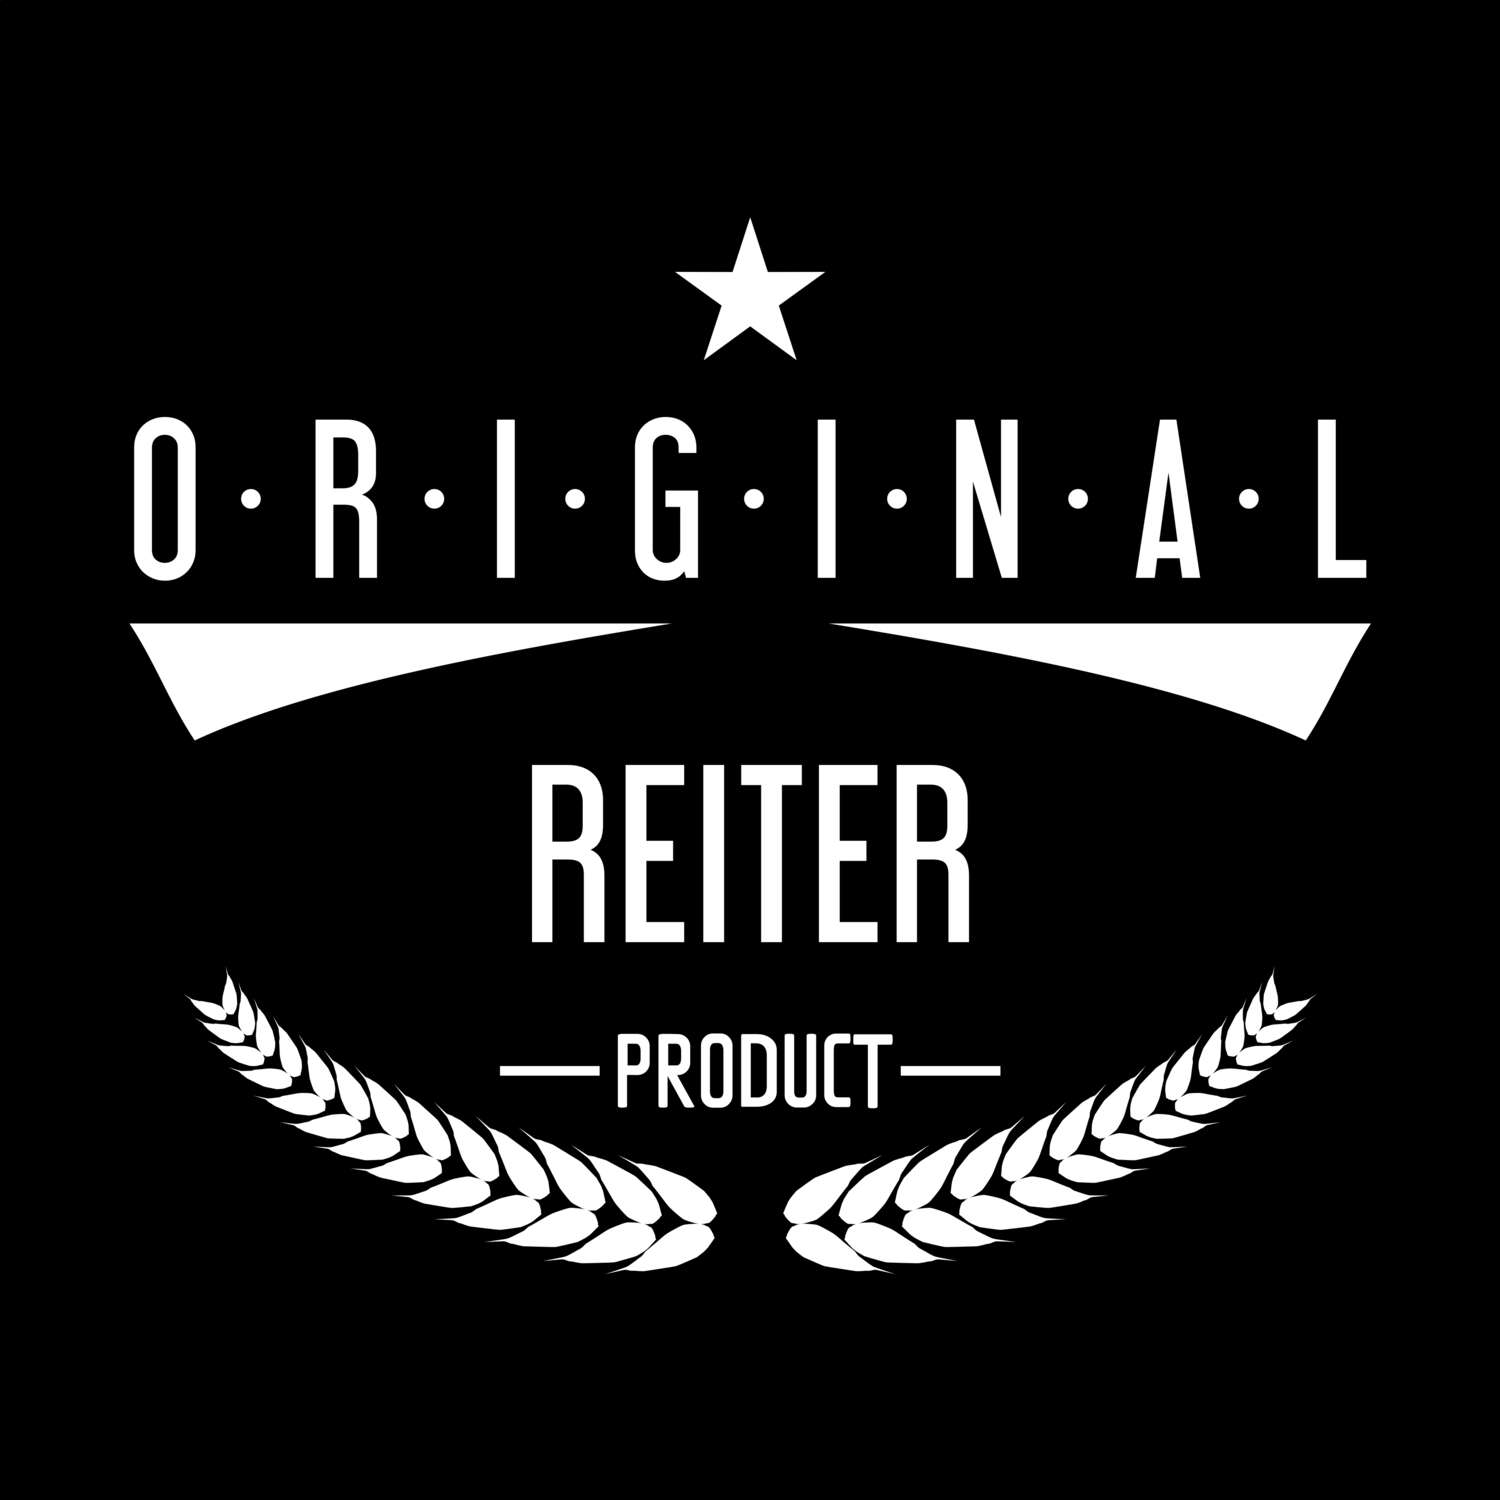 Reiter T-Shirt »Original Product«